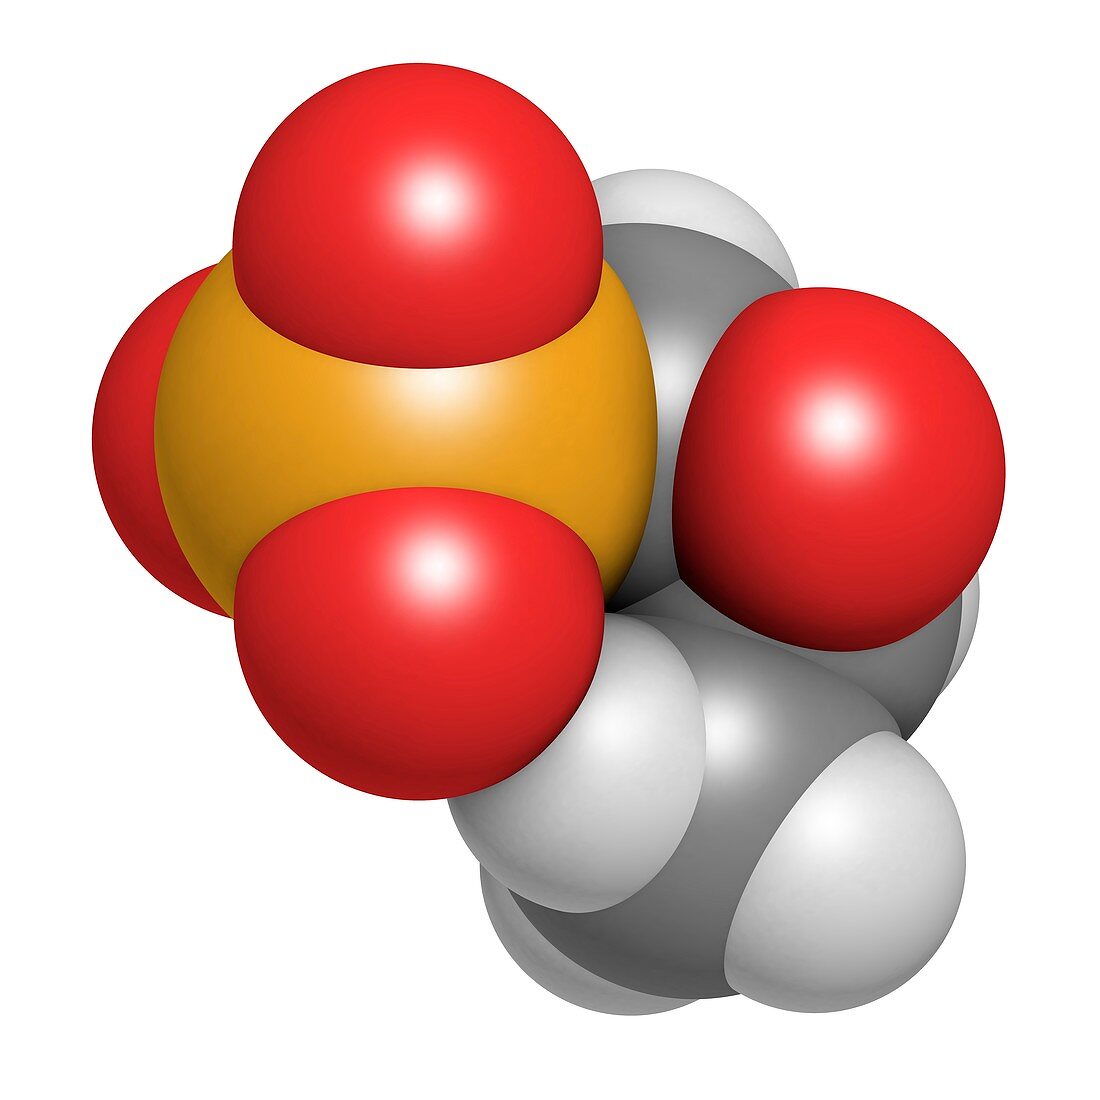 Fosfomycin antibacterial drug molecule